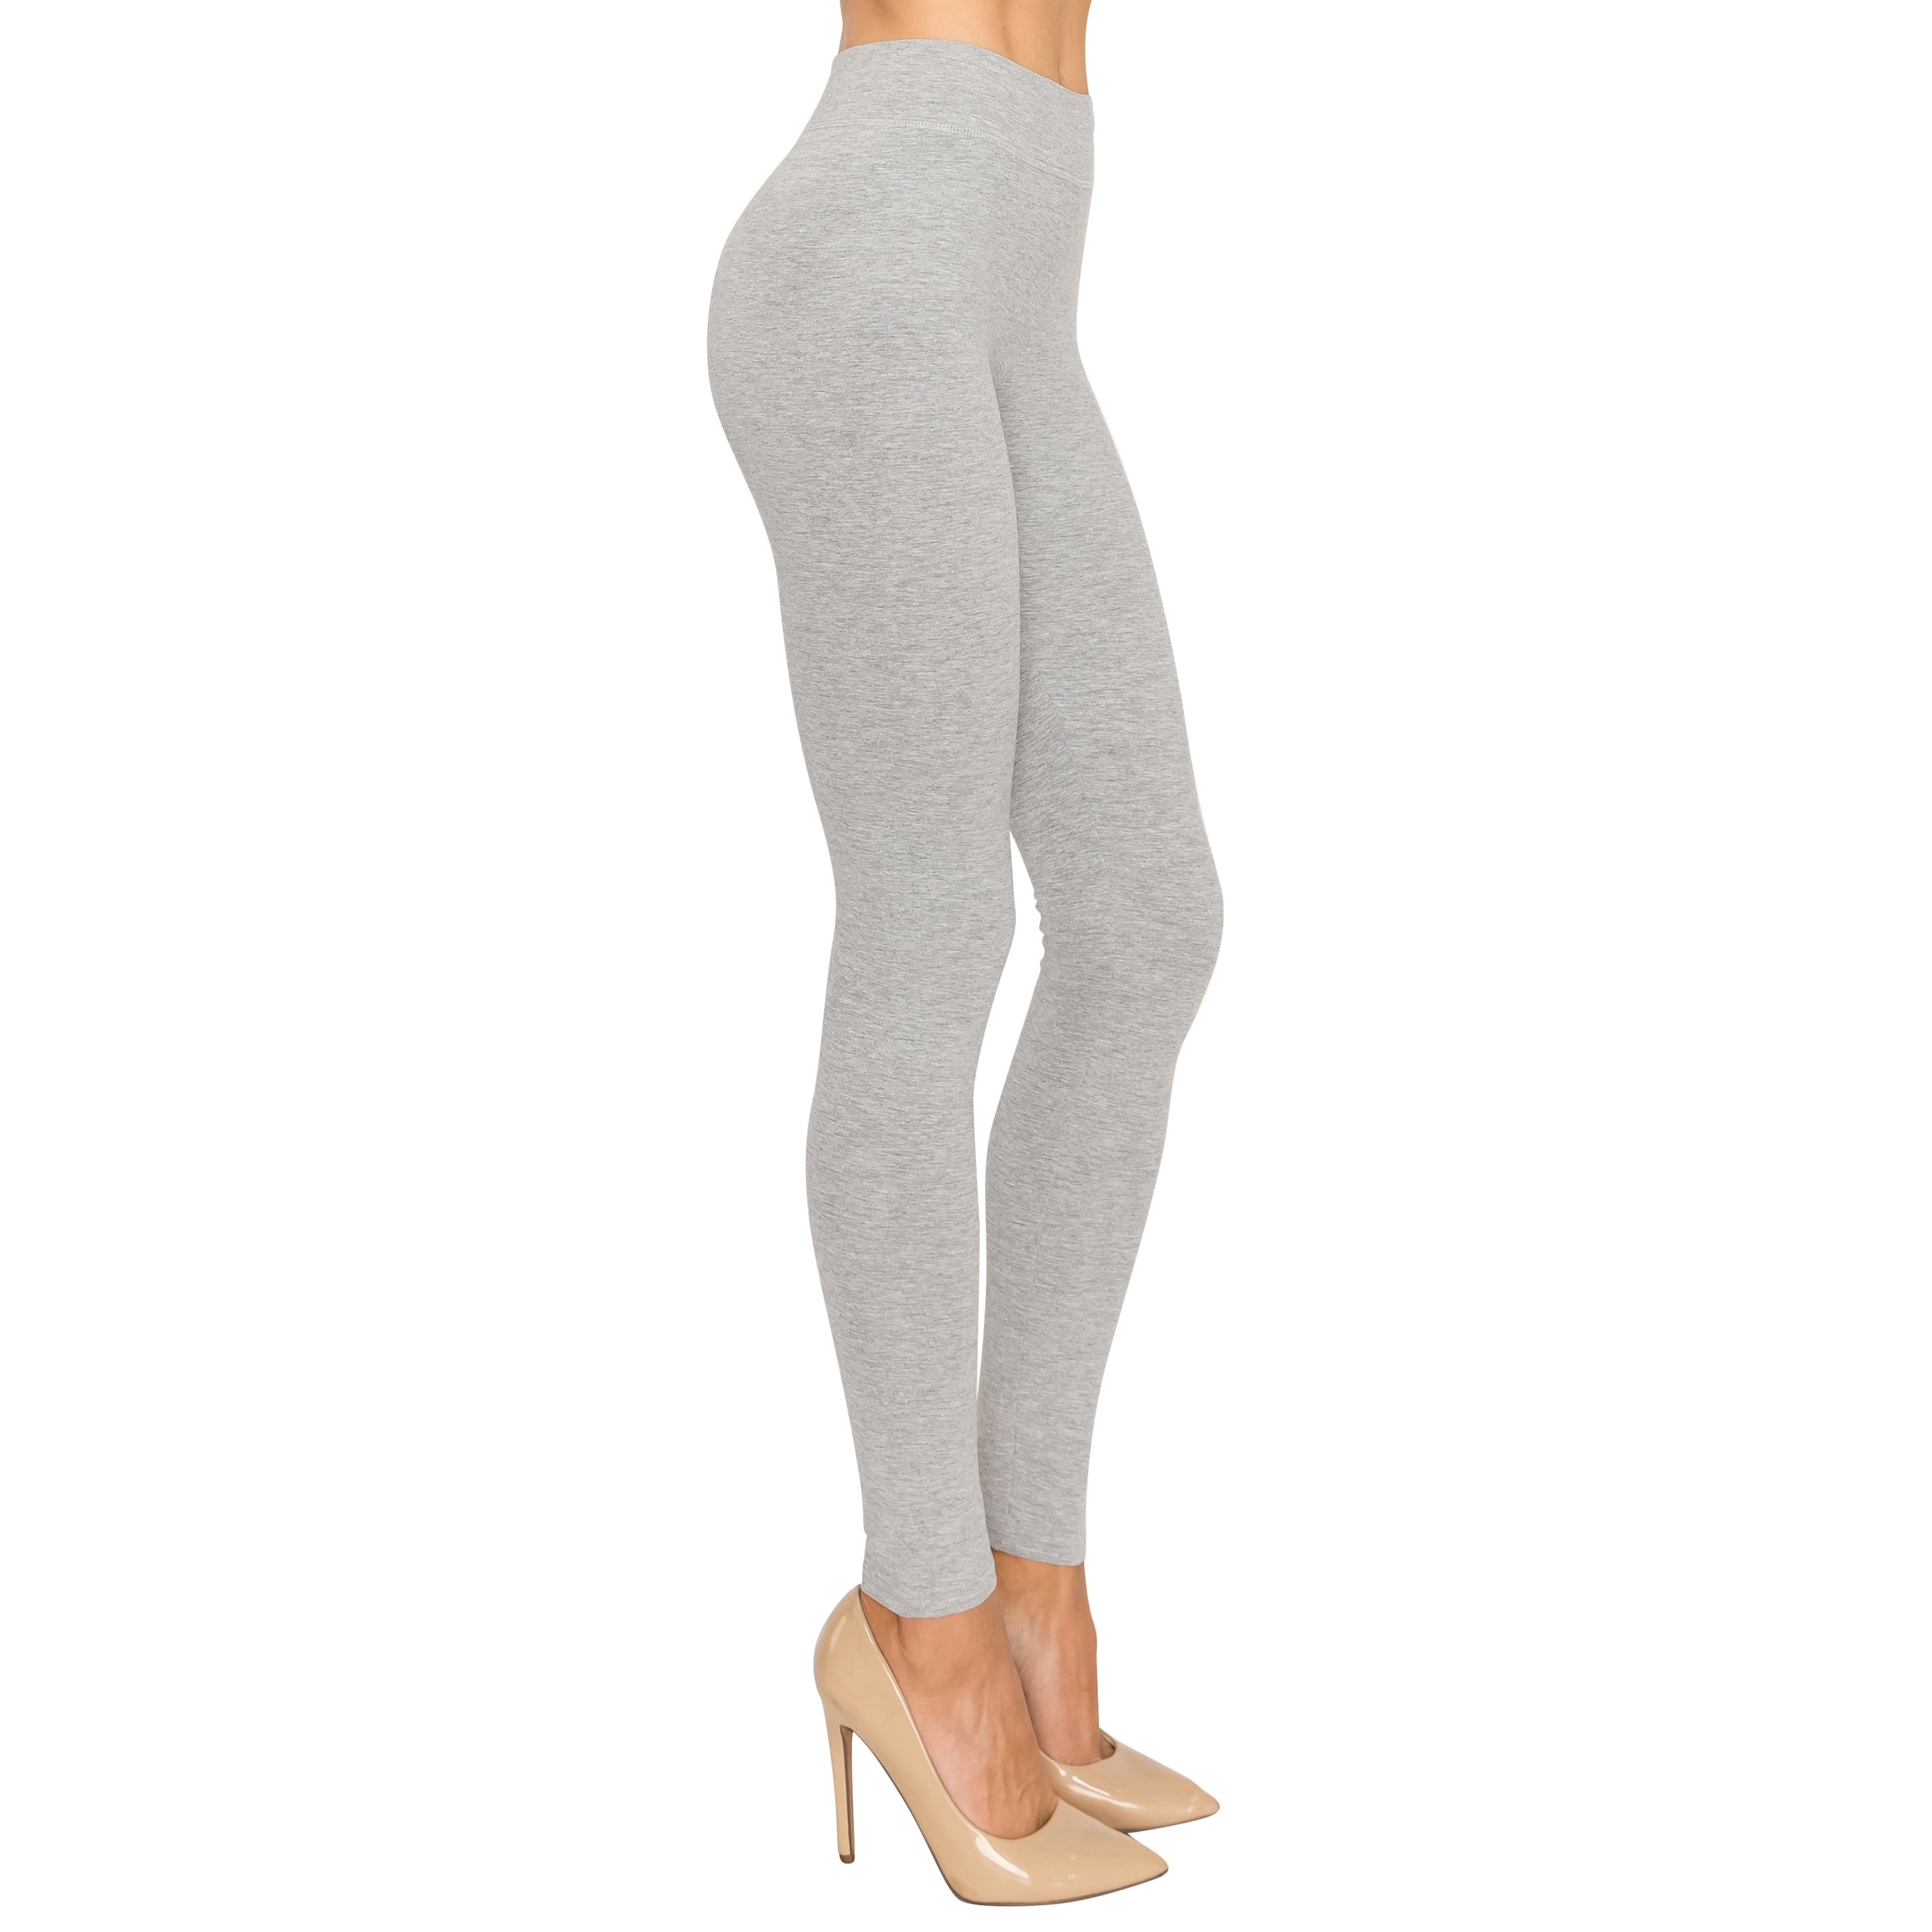 EttelLut Cotton Spandex Full Leggings Pants Activewear for Women Charcoal XL  